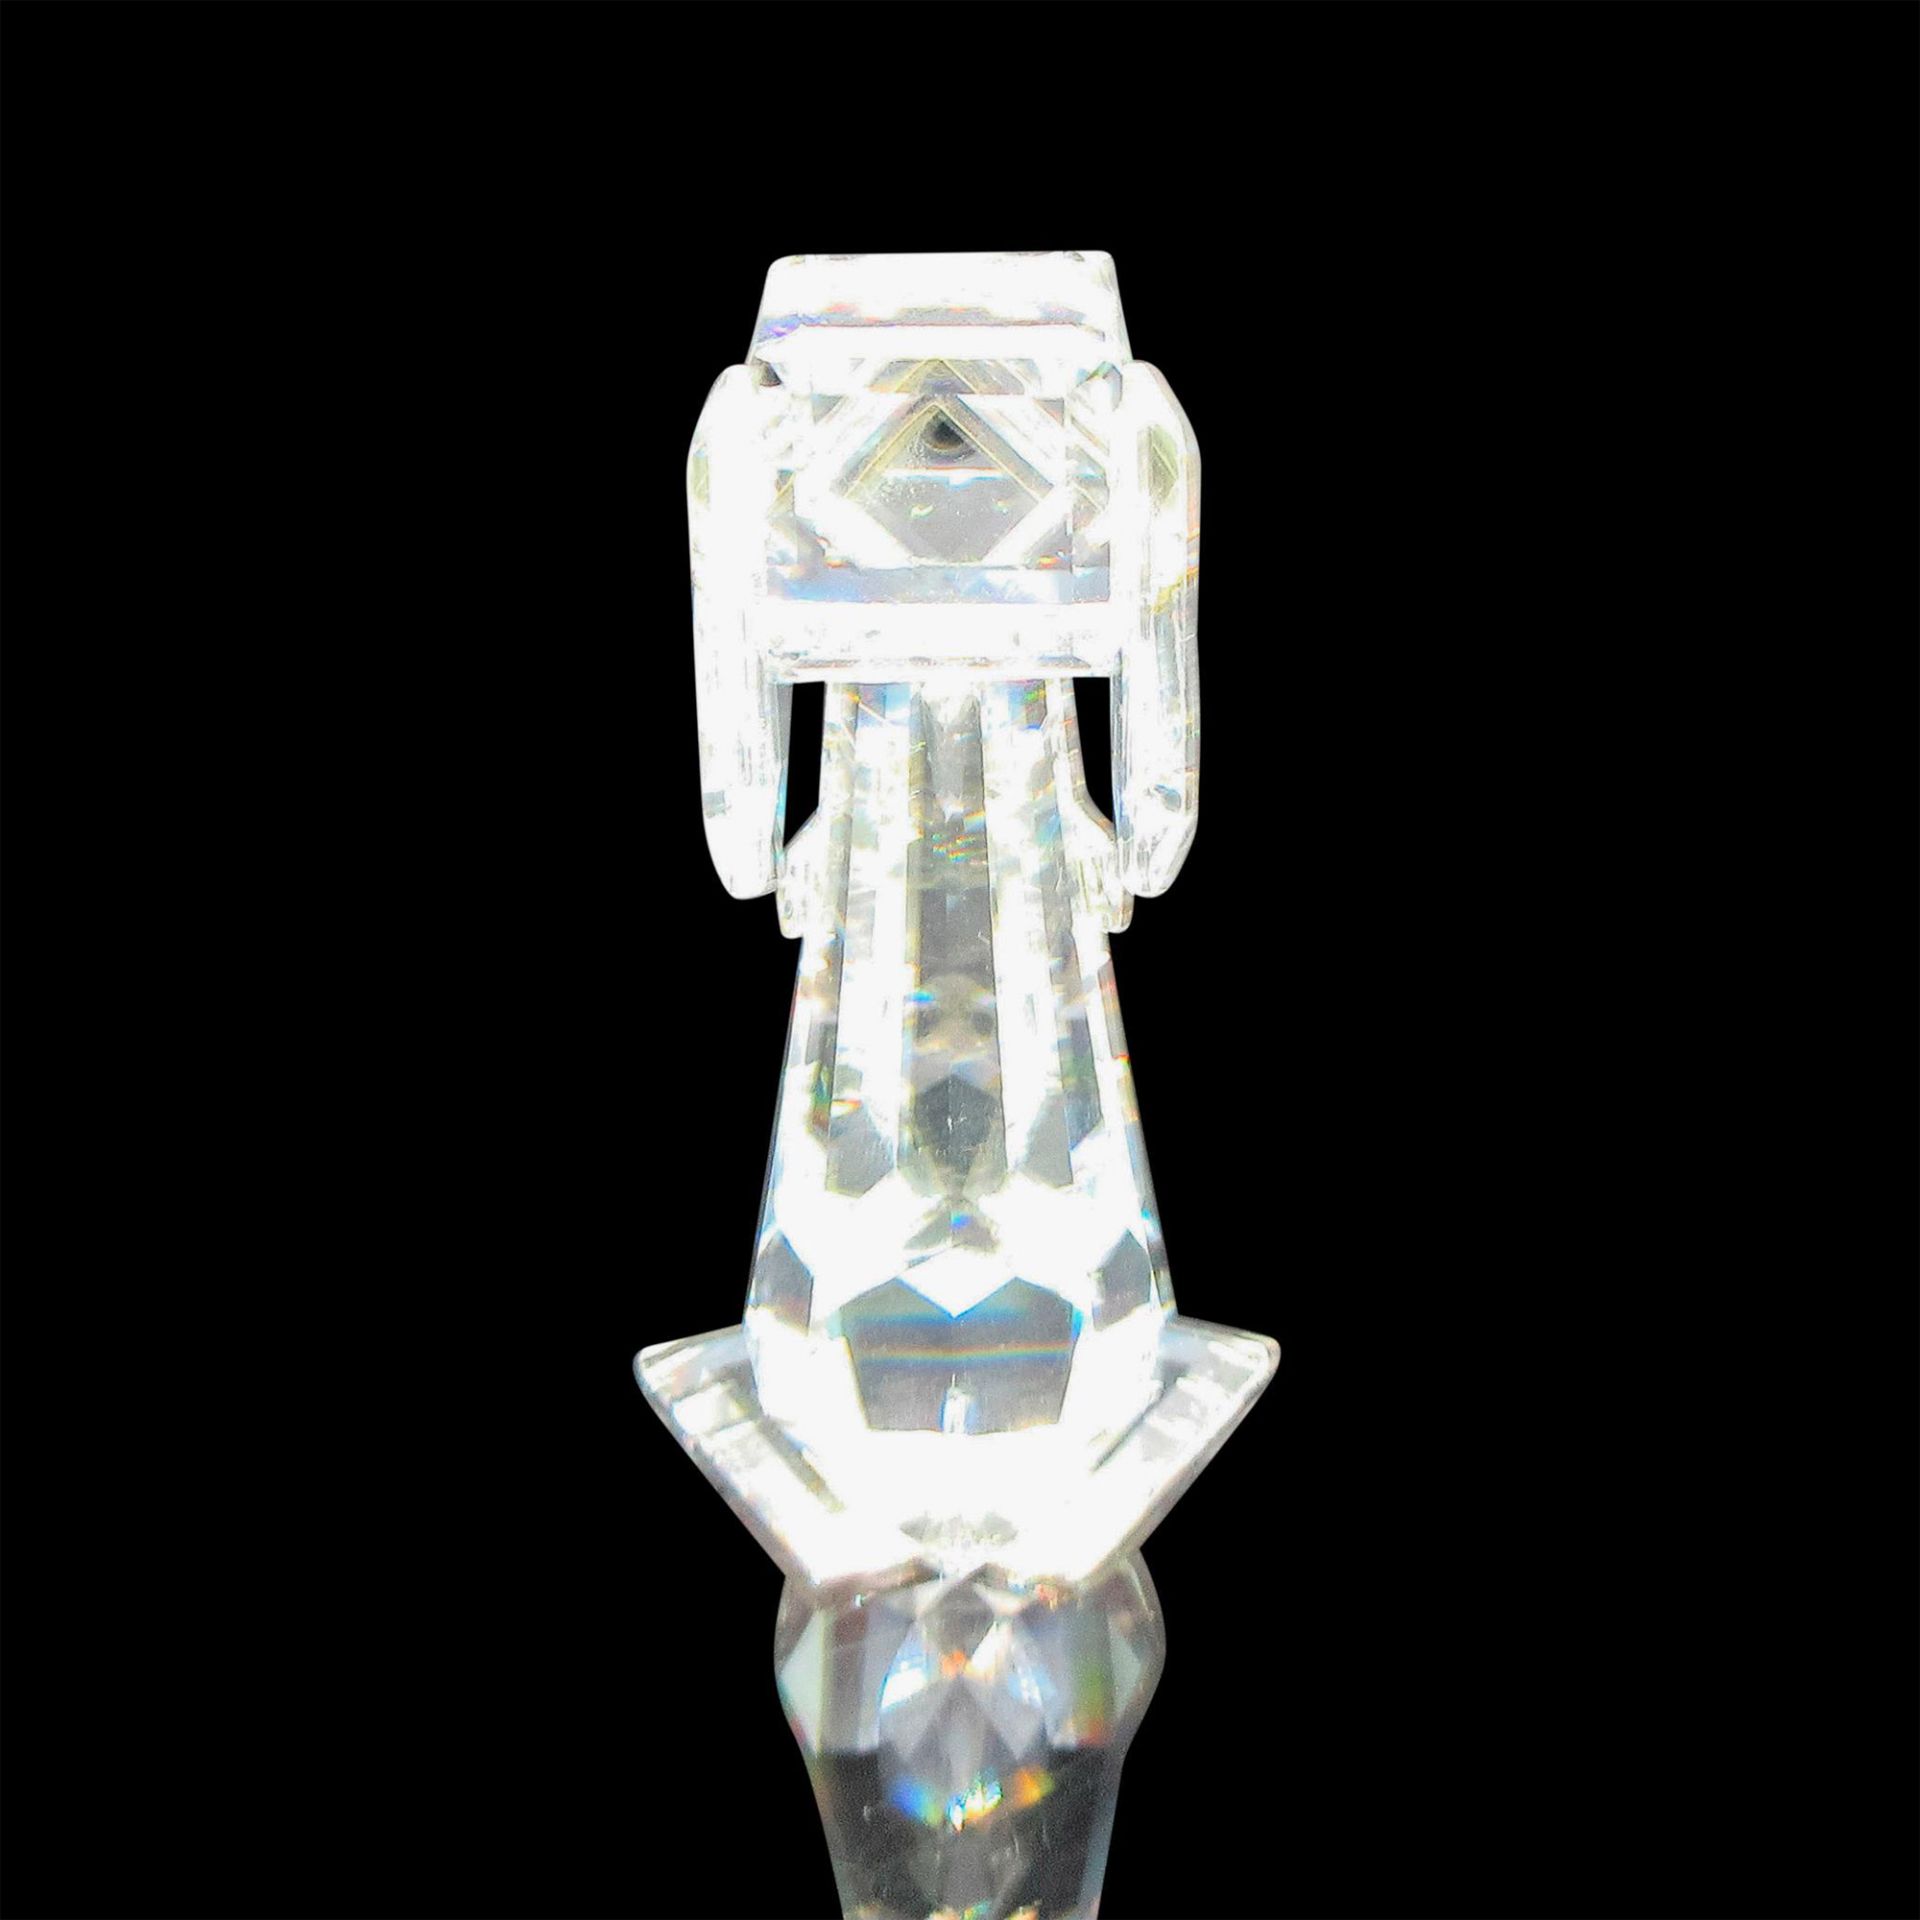 Swarovski Silver Crystal Figurine, Pluto - Image 2 of 4